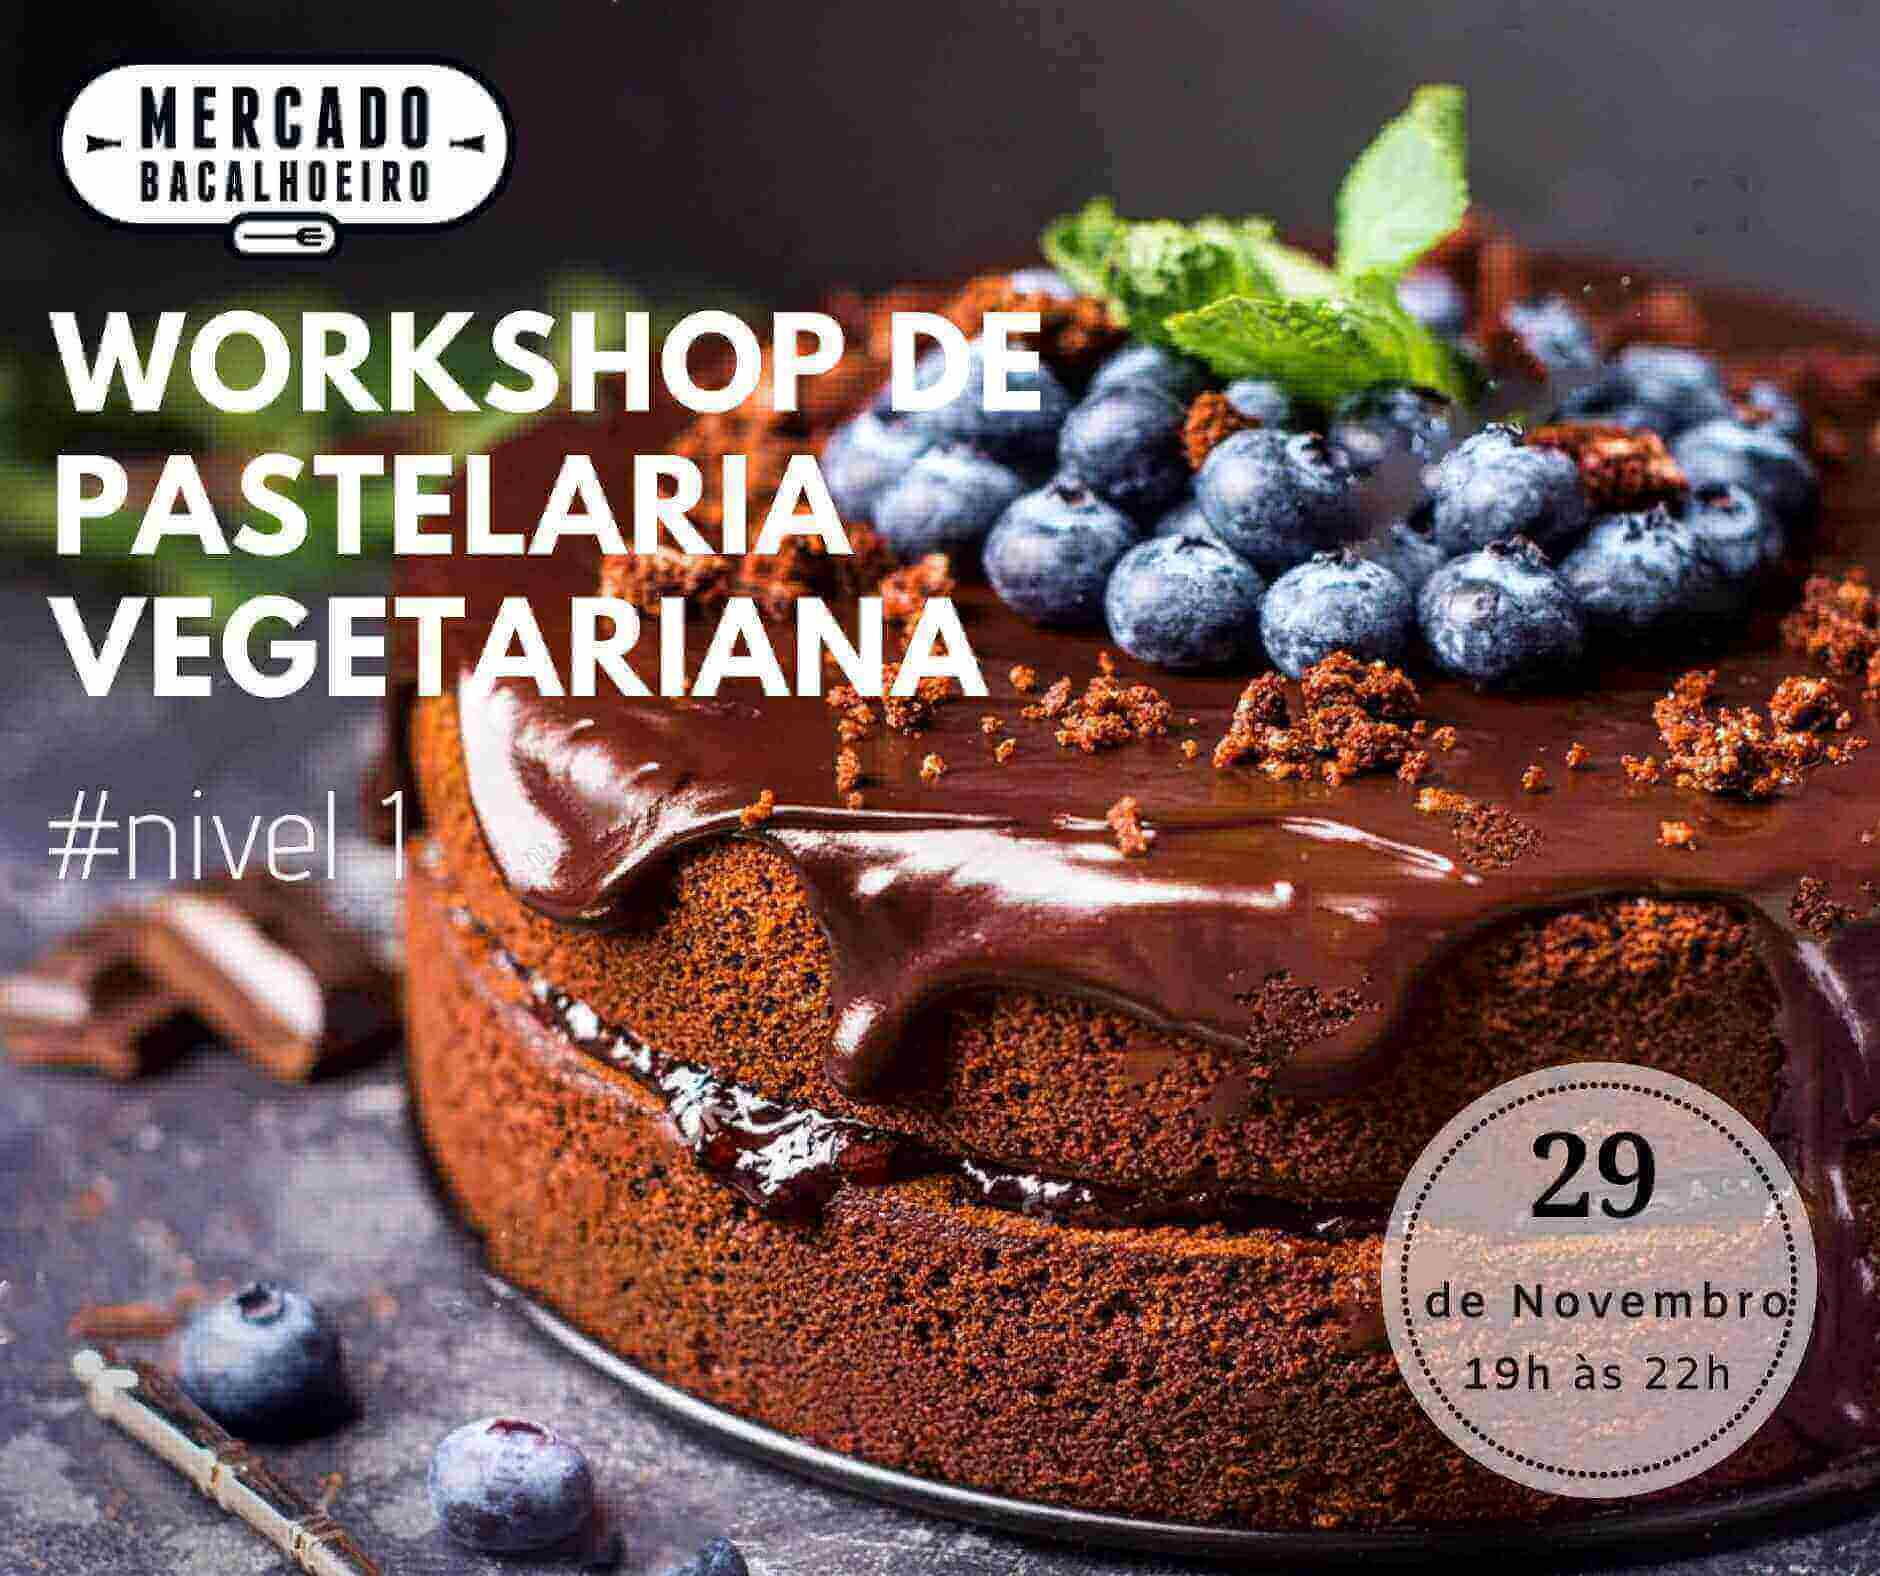 Workshop de pastelaria vegetariana